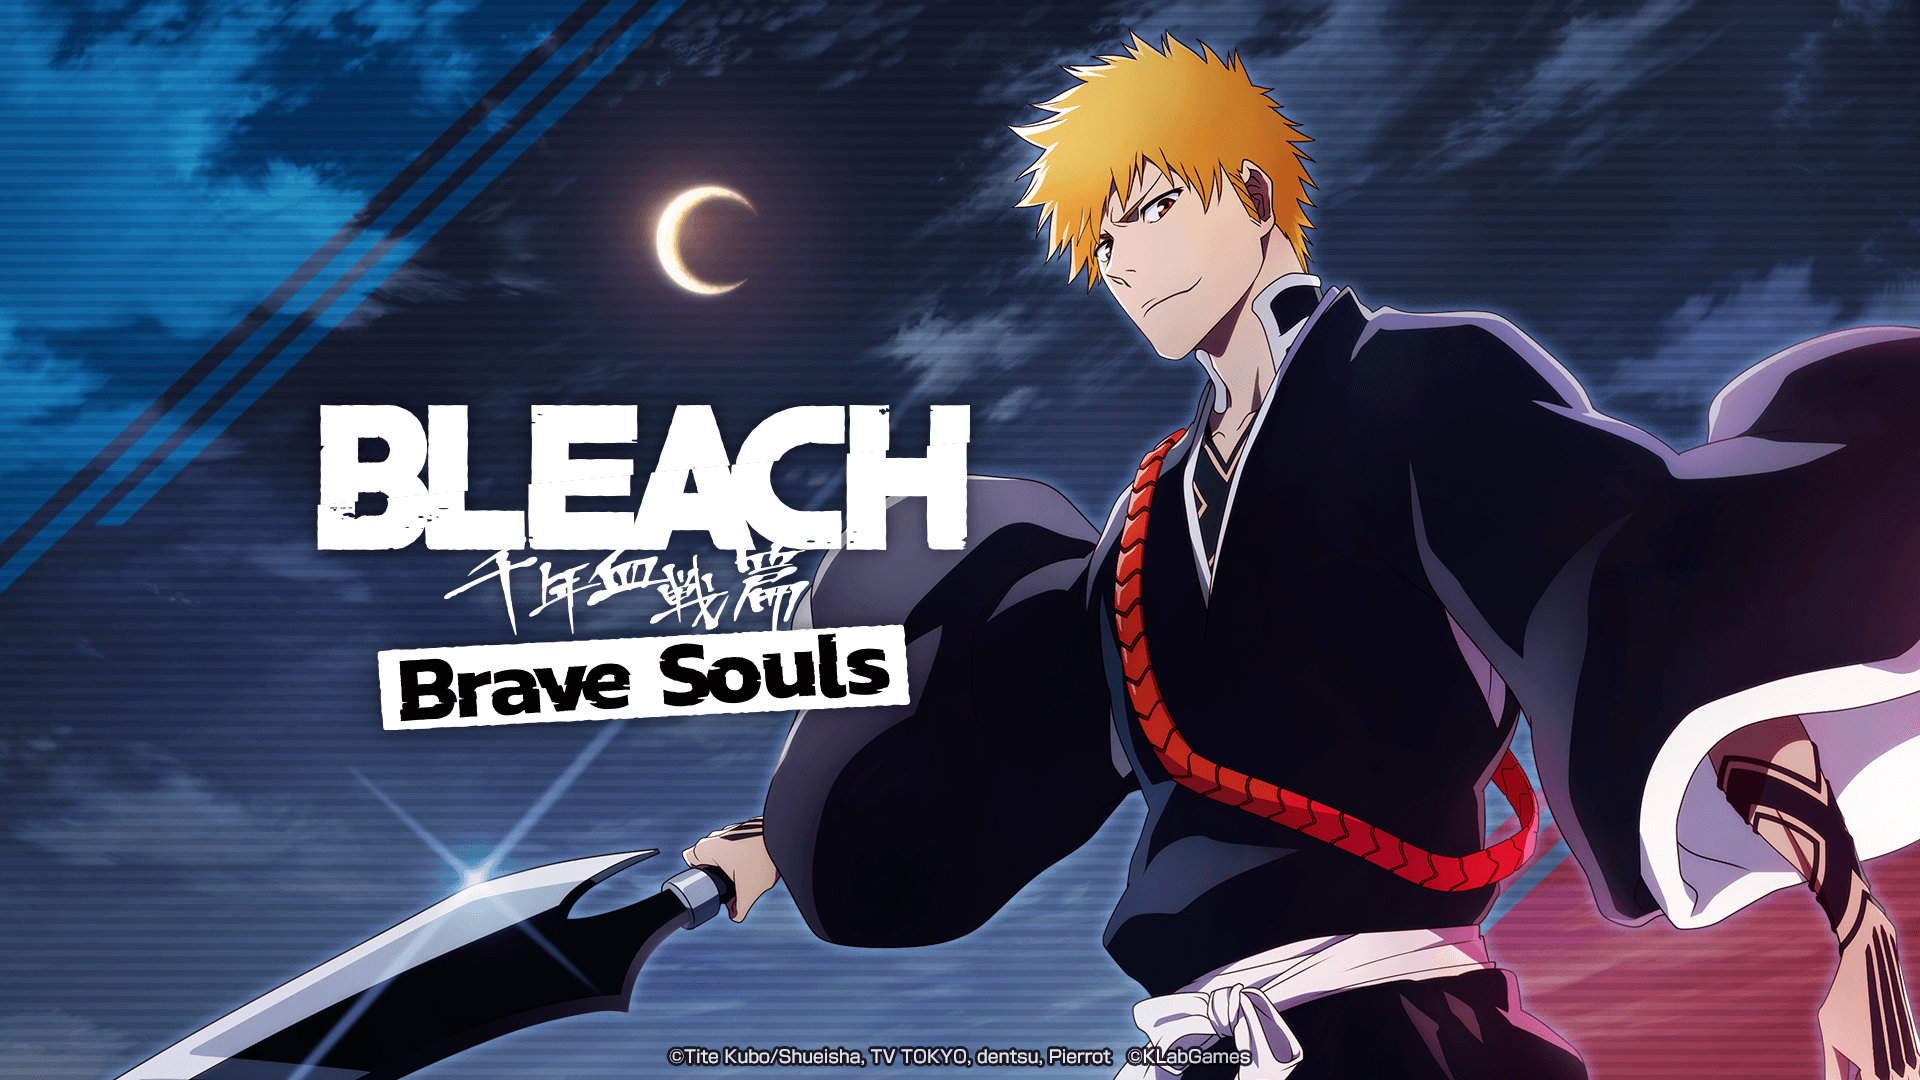 “Bleach Brave Souls” Celebrates the BLEACH TV Animation Series